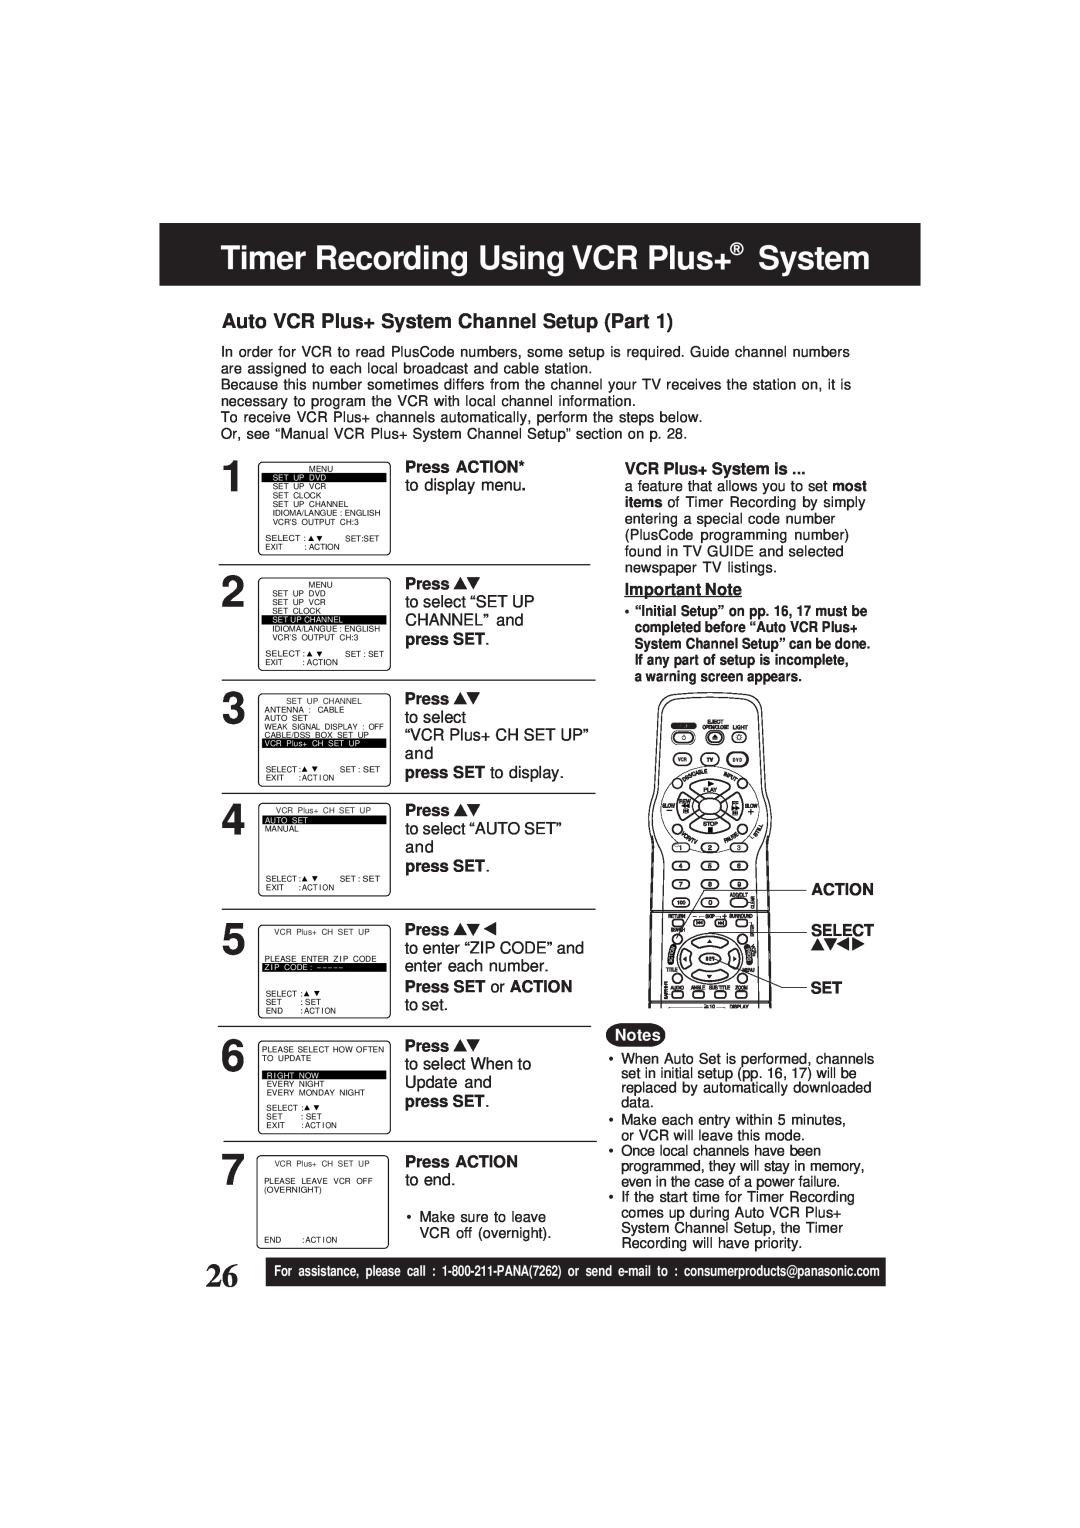 Panasonic PV-D4761 Timer Recording Using VCR Plus+ System, Auto VCR Plus+ System Channel Setup Part, Press ACTION 